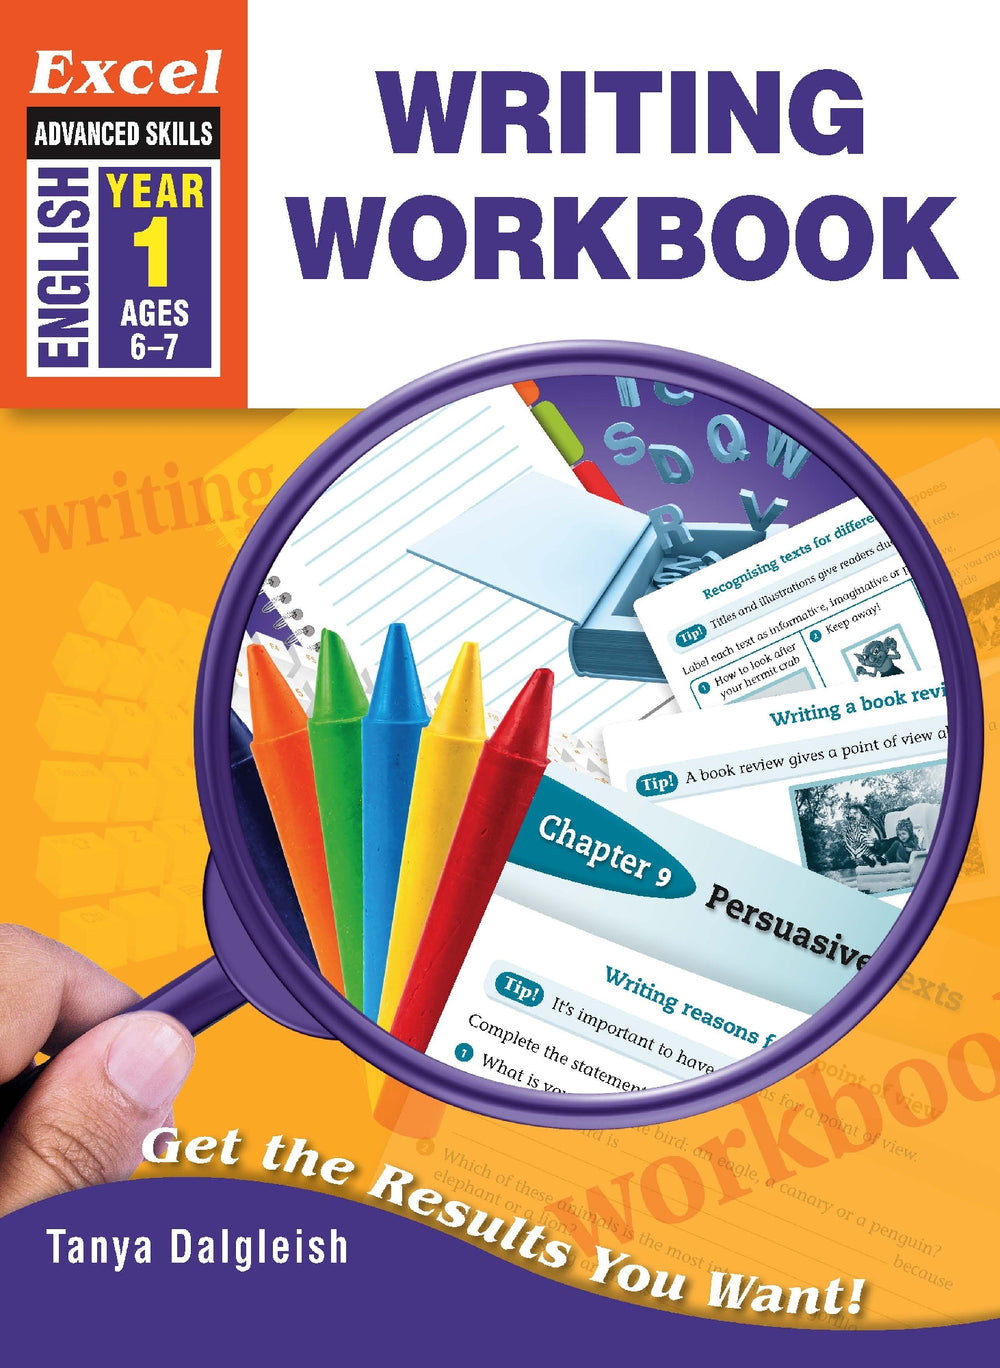 Excel Advanced Skills Workbook: Writing Workbook Year 1